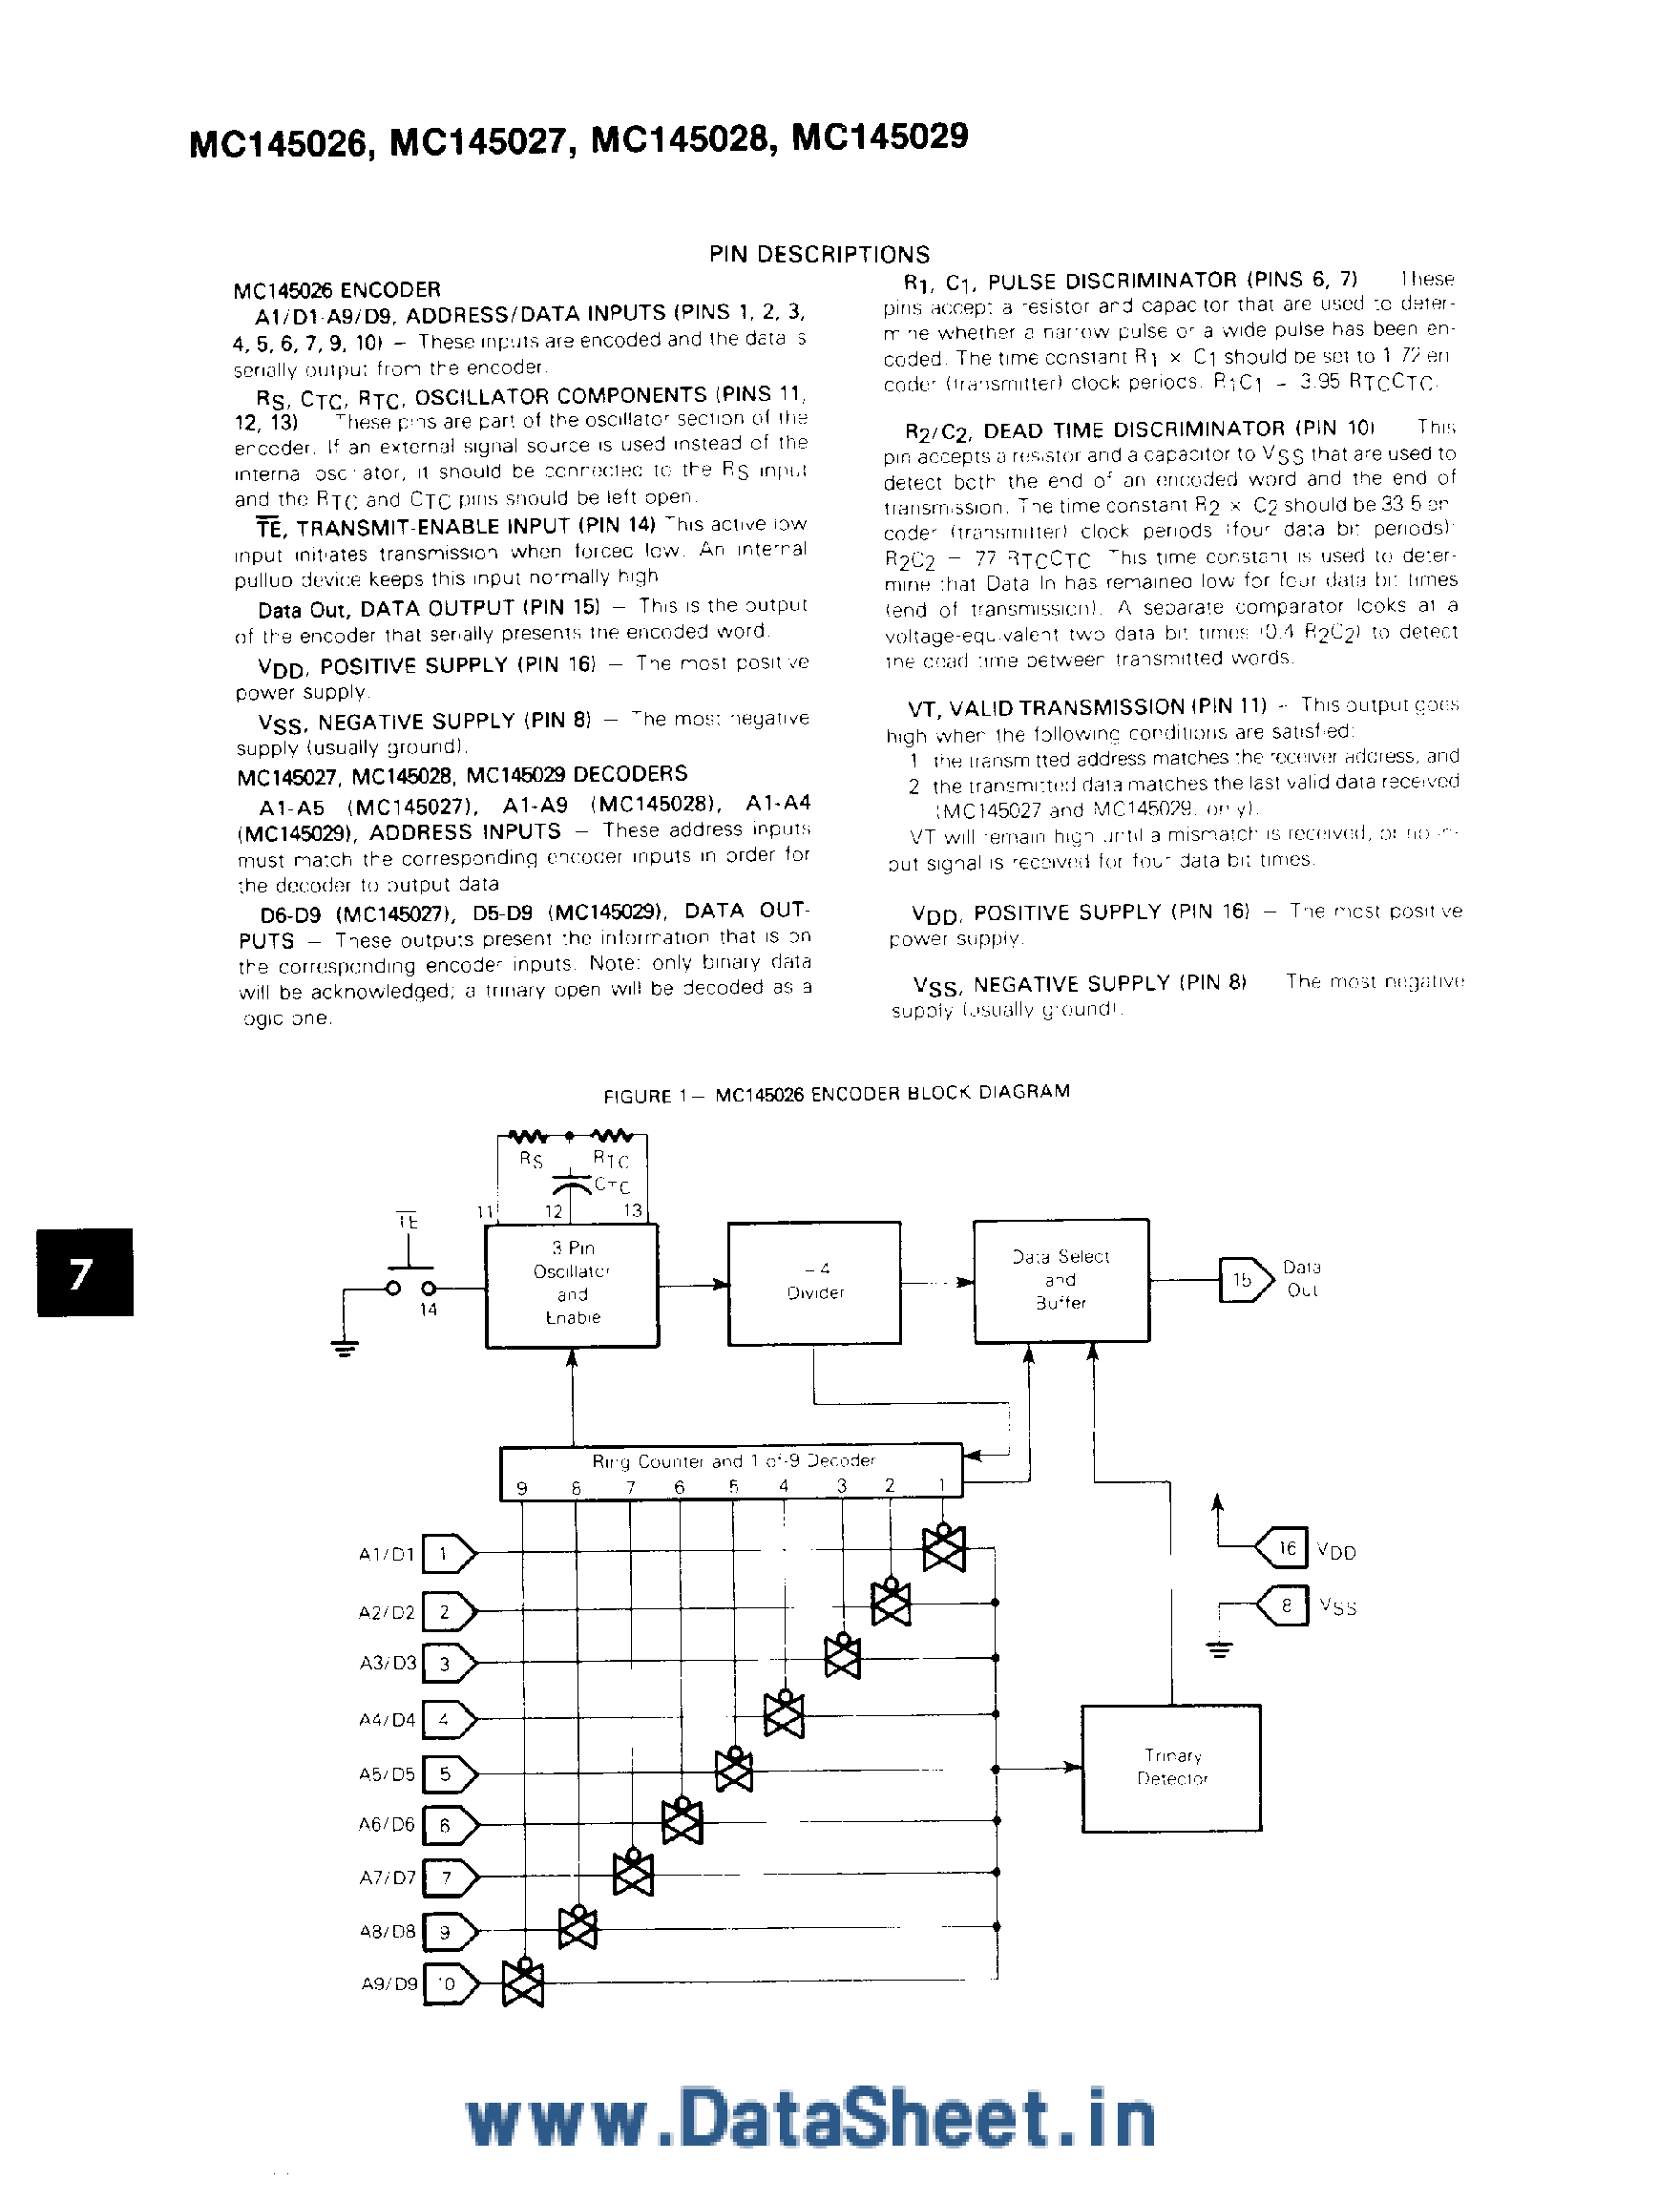 Даташит MC14457 - (MC14457 / MC14458) REMOTE-CONTROL TRANSMITTER/ENCODER страница 1